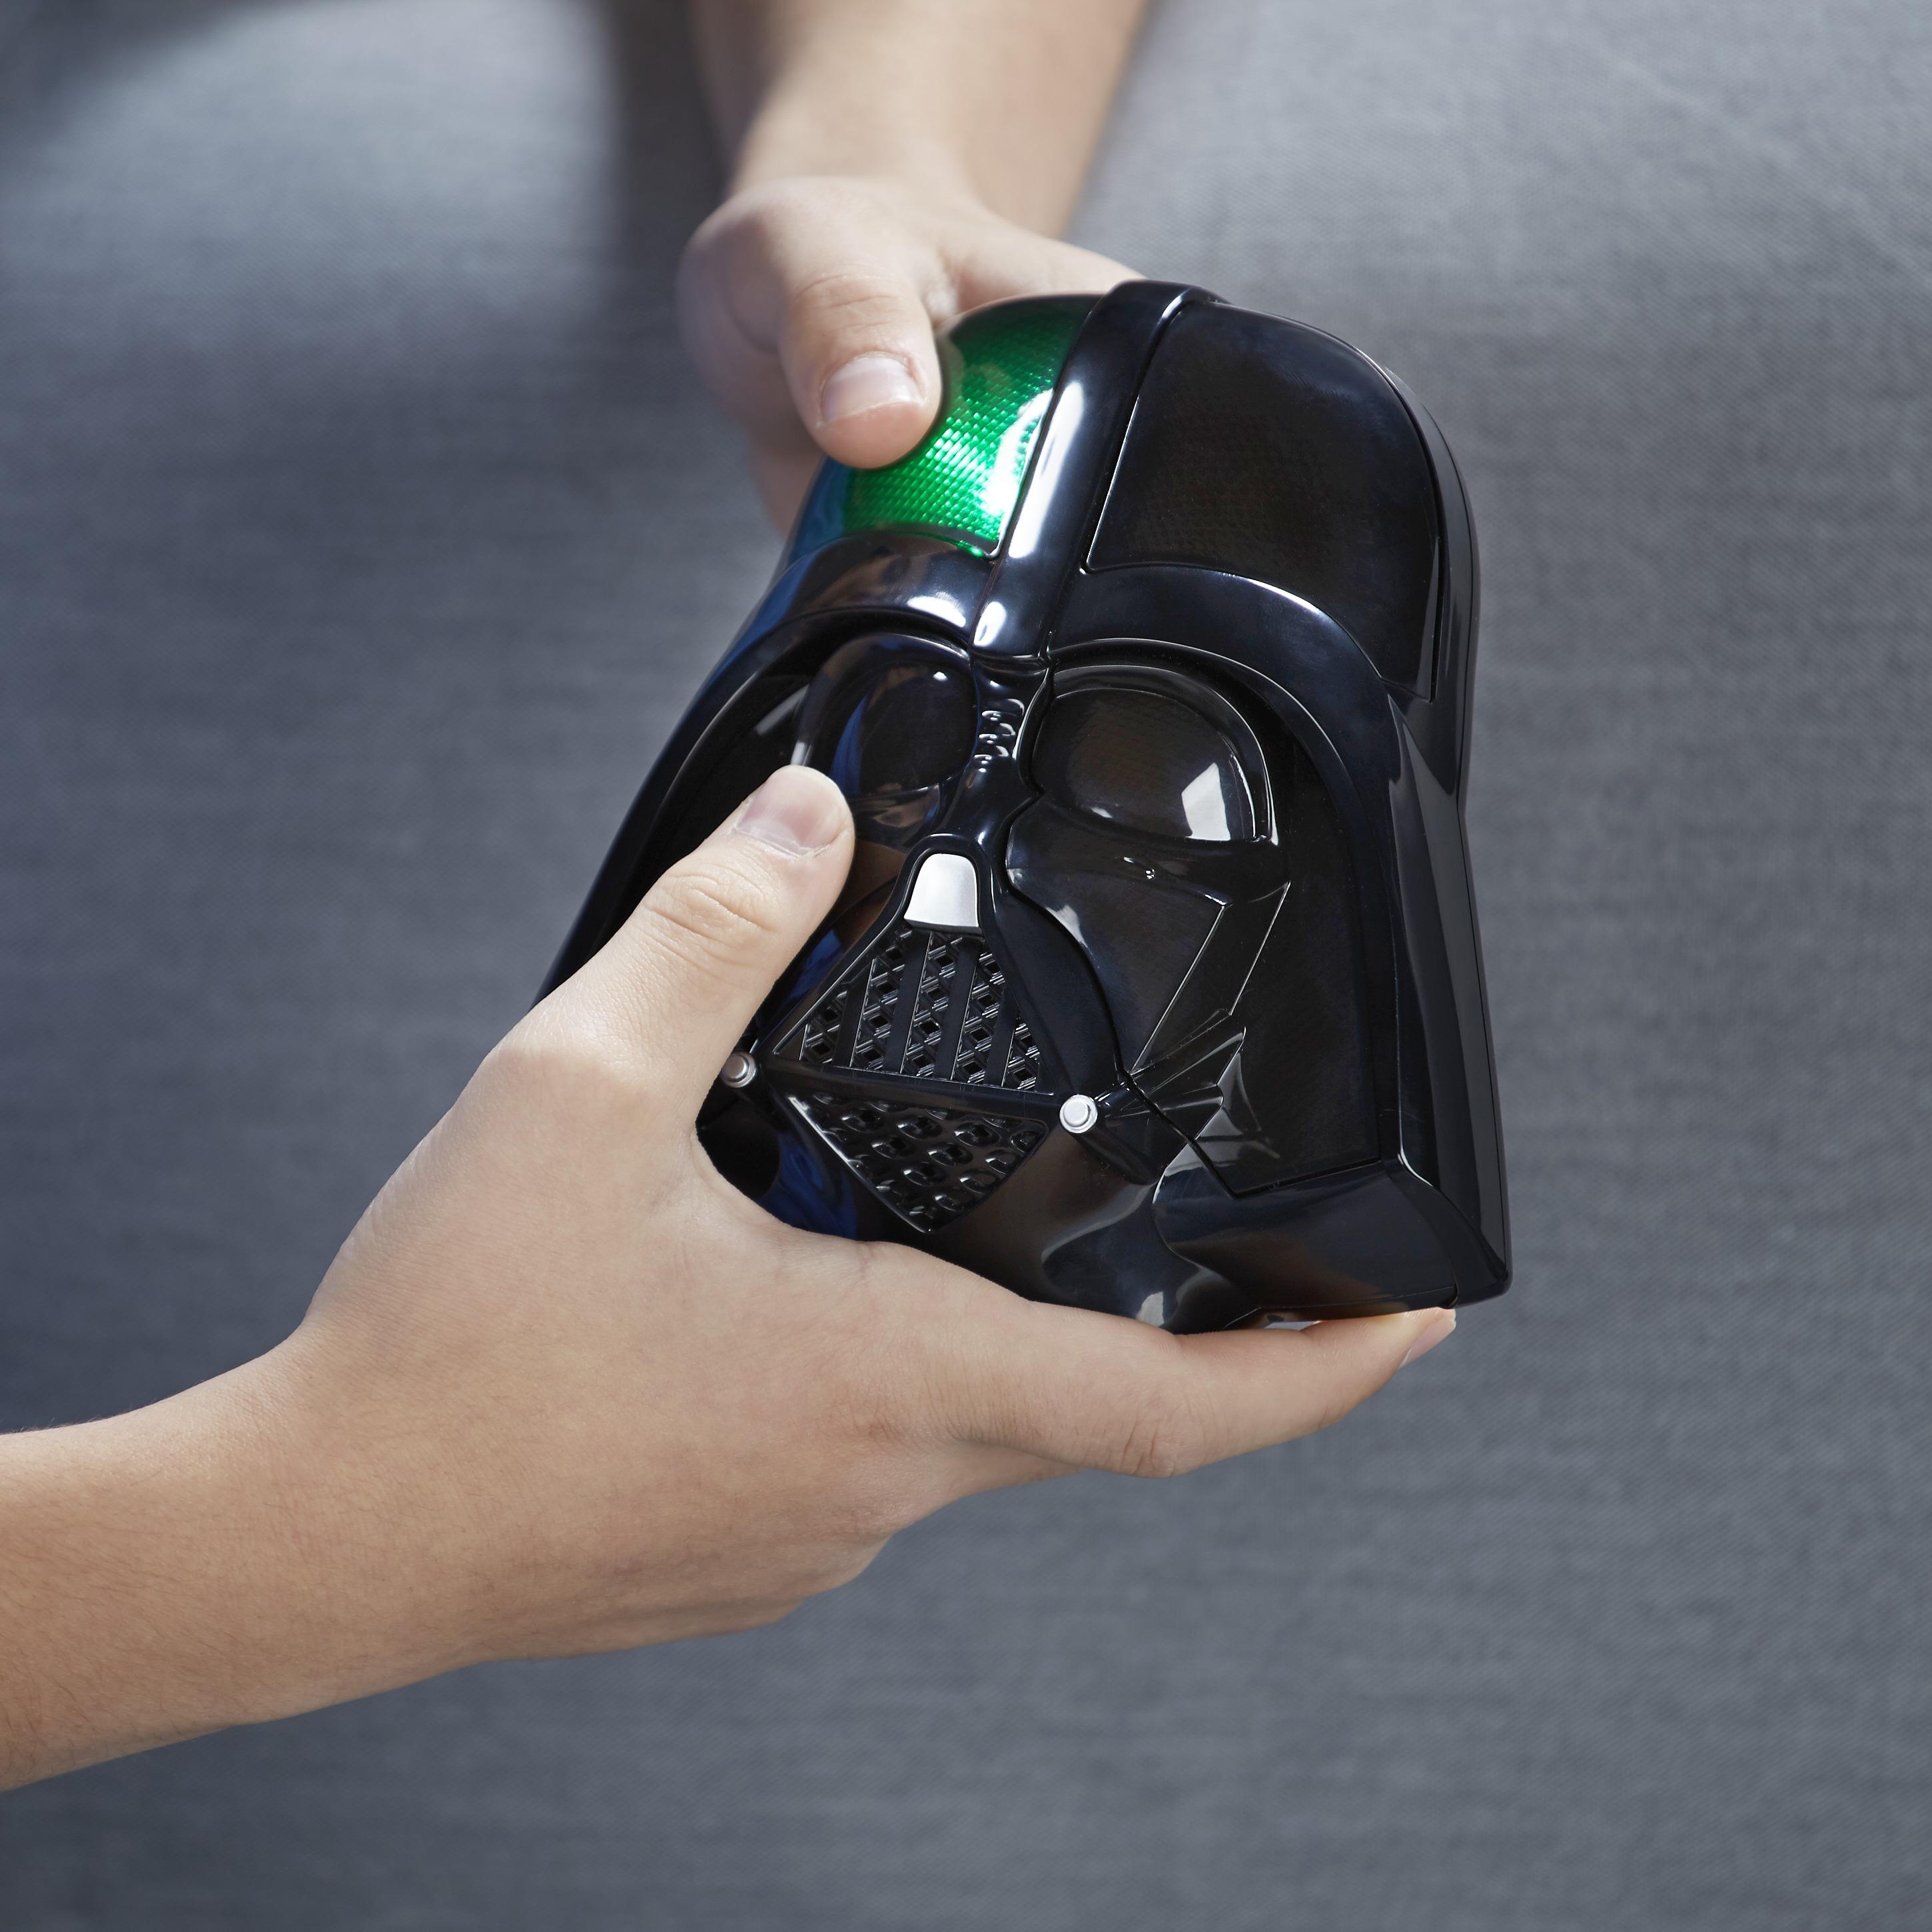 NEW Hasbro Disney JEU Simon Star Wars Darth Vader Game Electronic Gift 